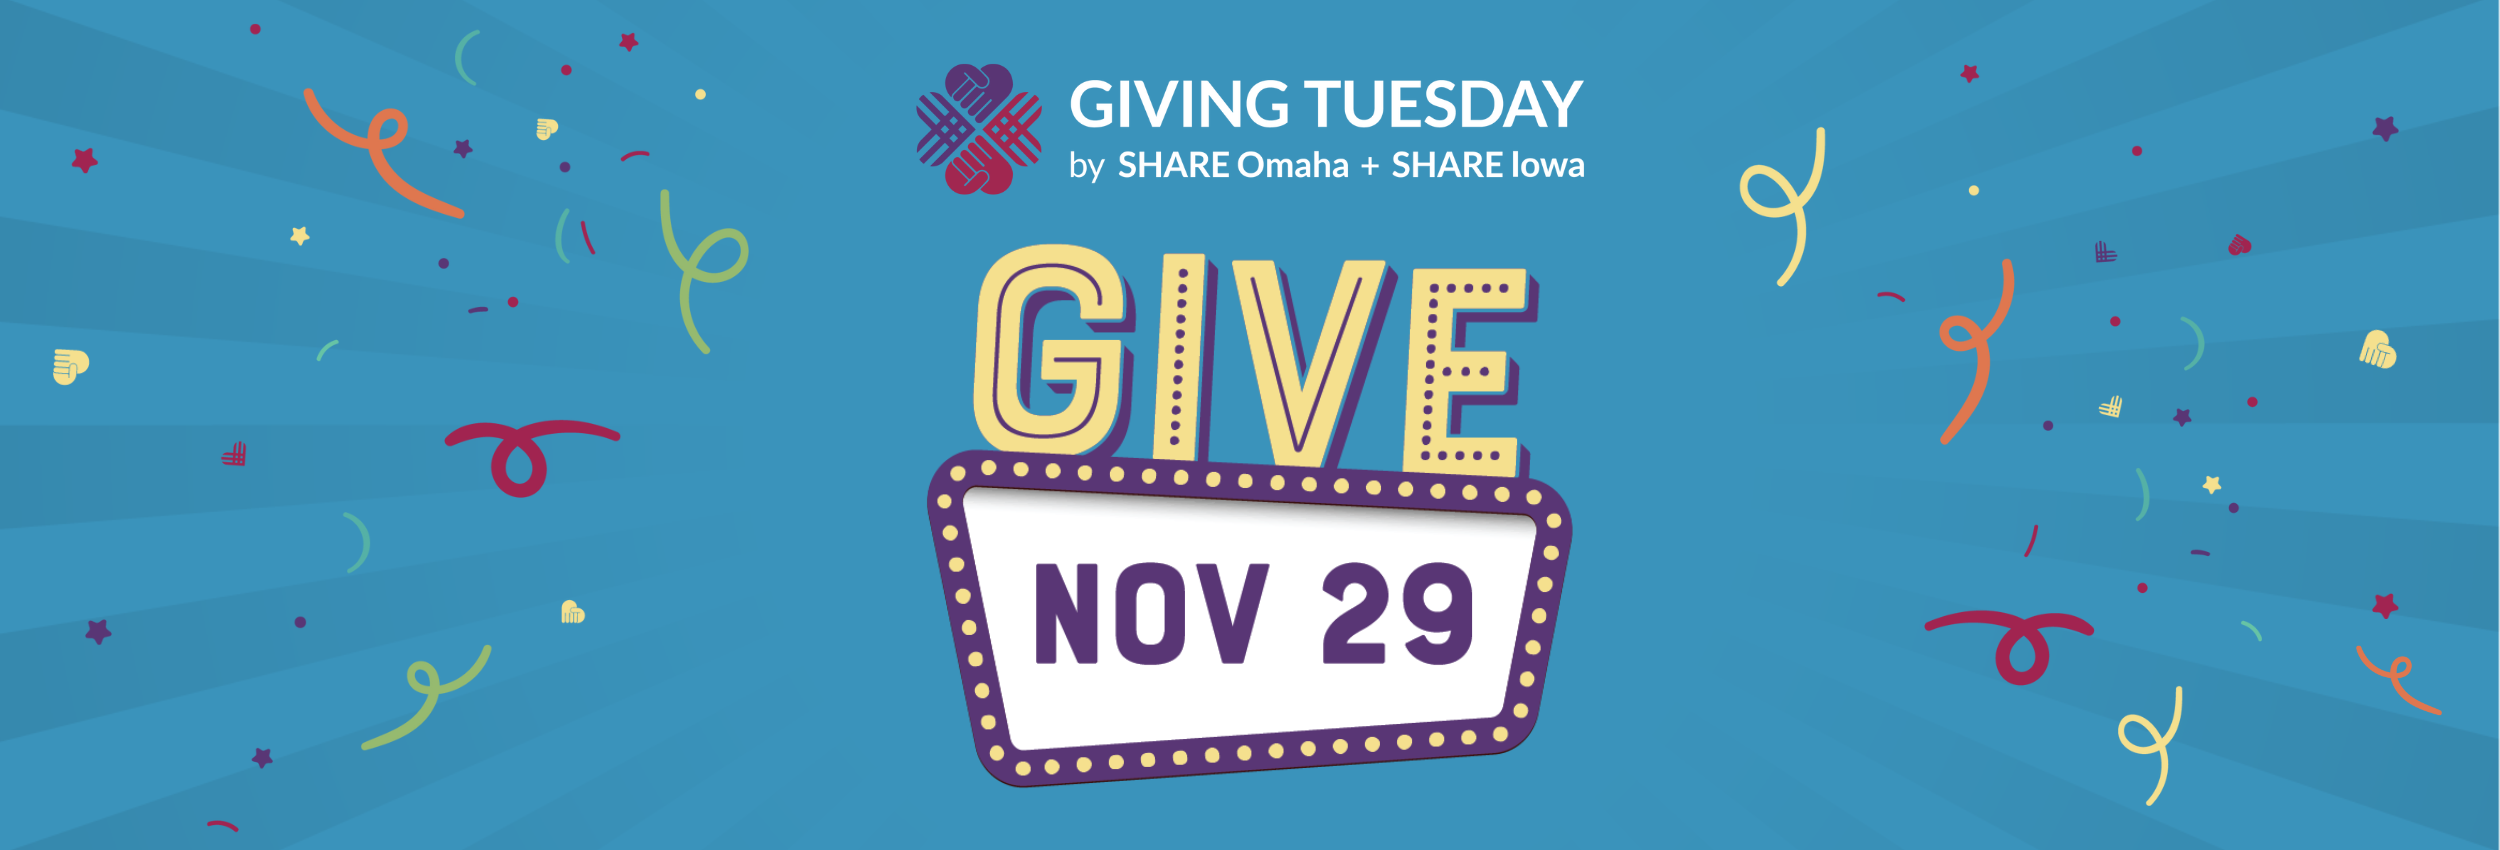 Give Nov 29 Campaign image